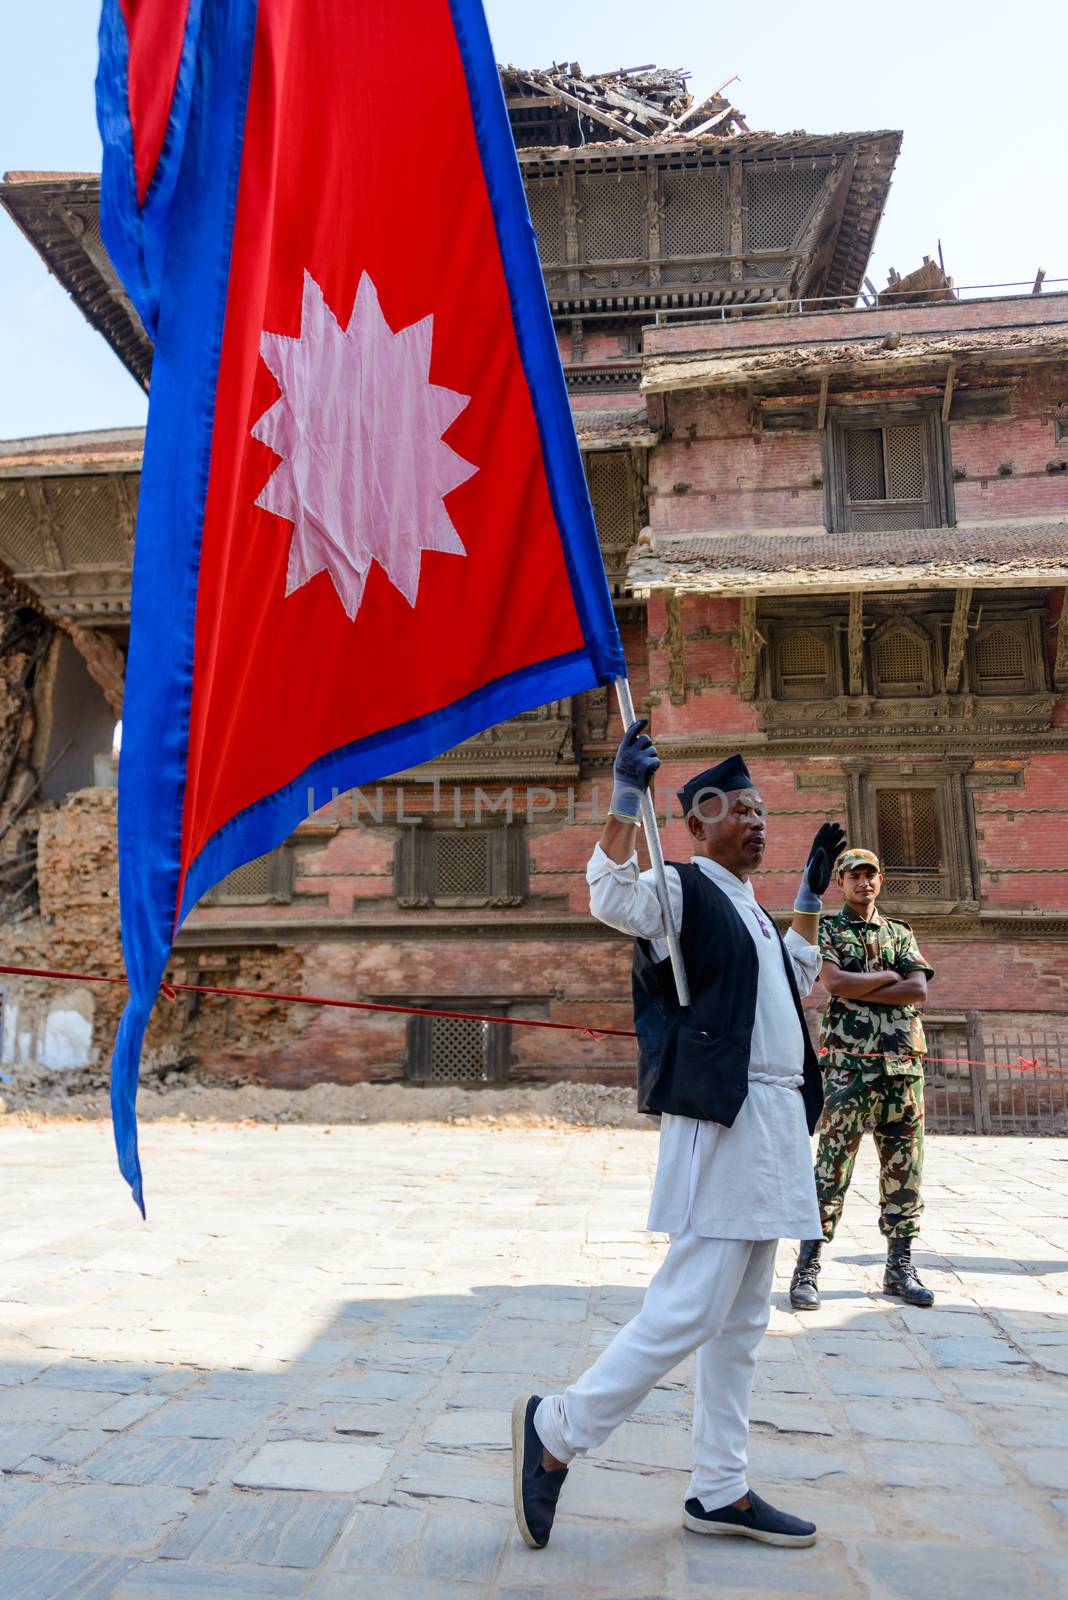 Nepal earthquakes by dutourdumonde